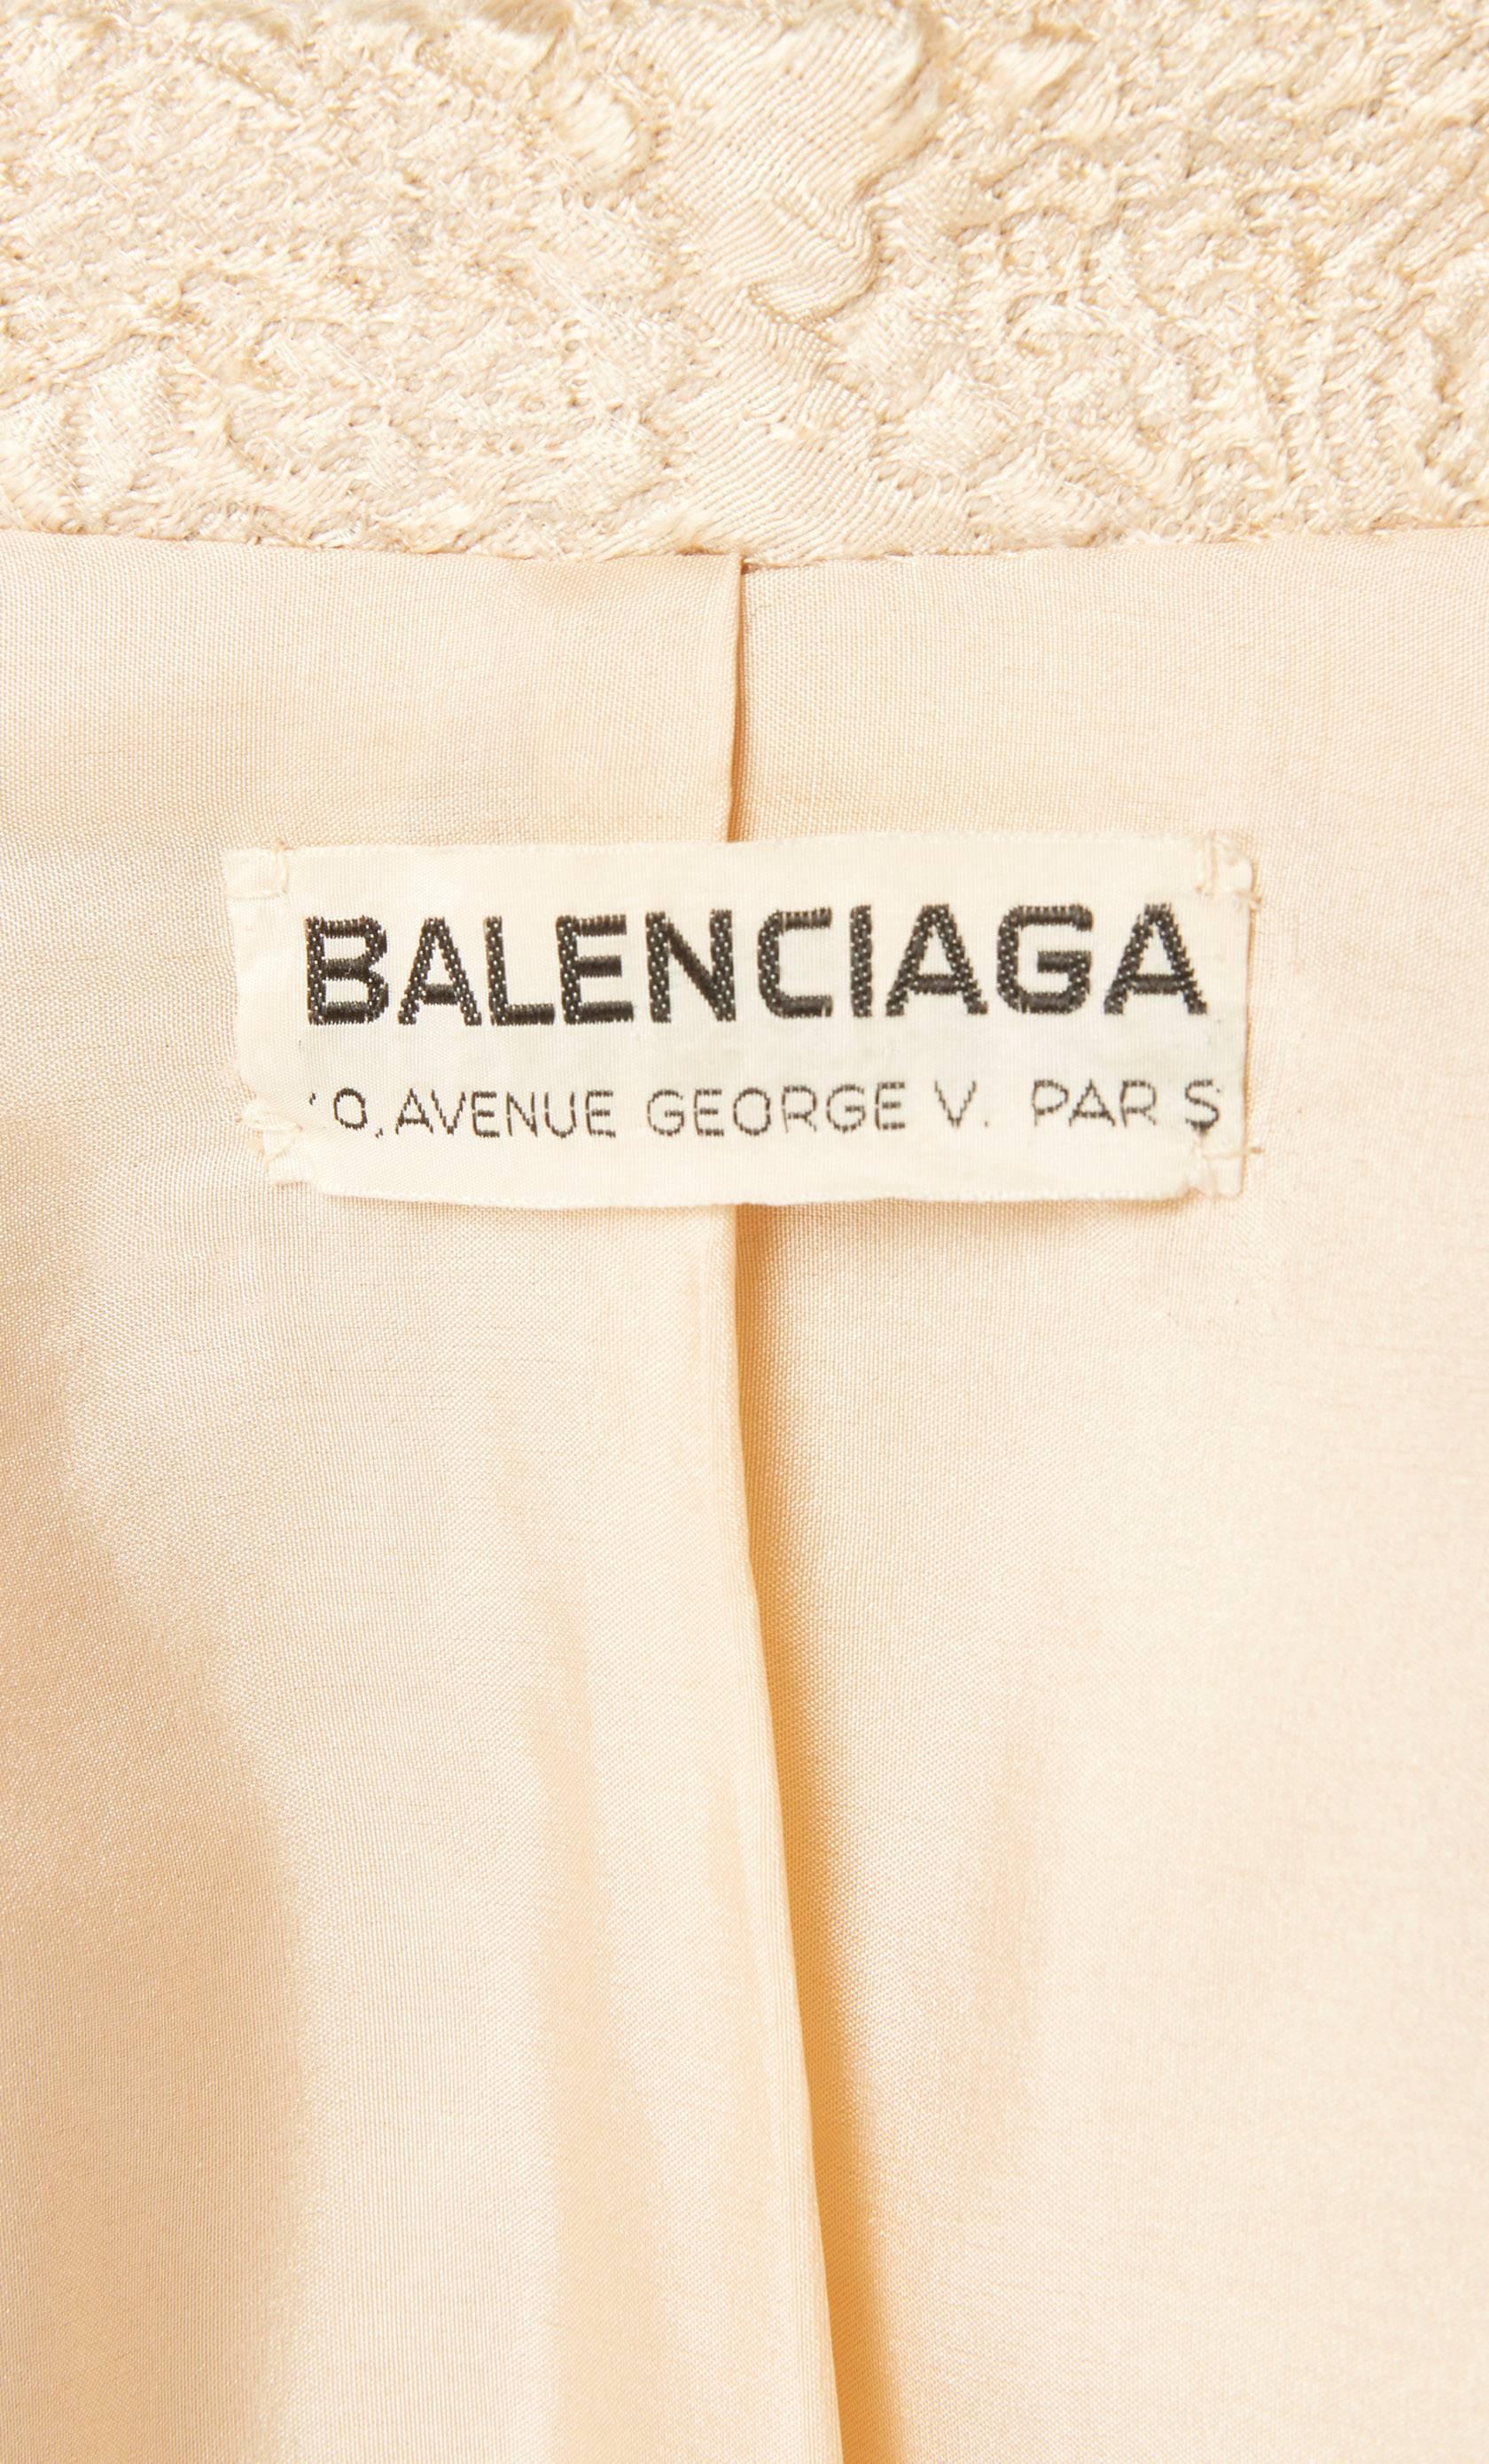 Balenciaga haute couture beige coat dress, Spring/Summer 1964 1